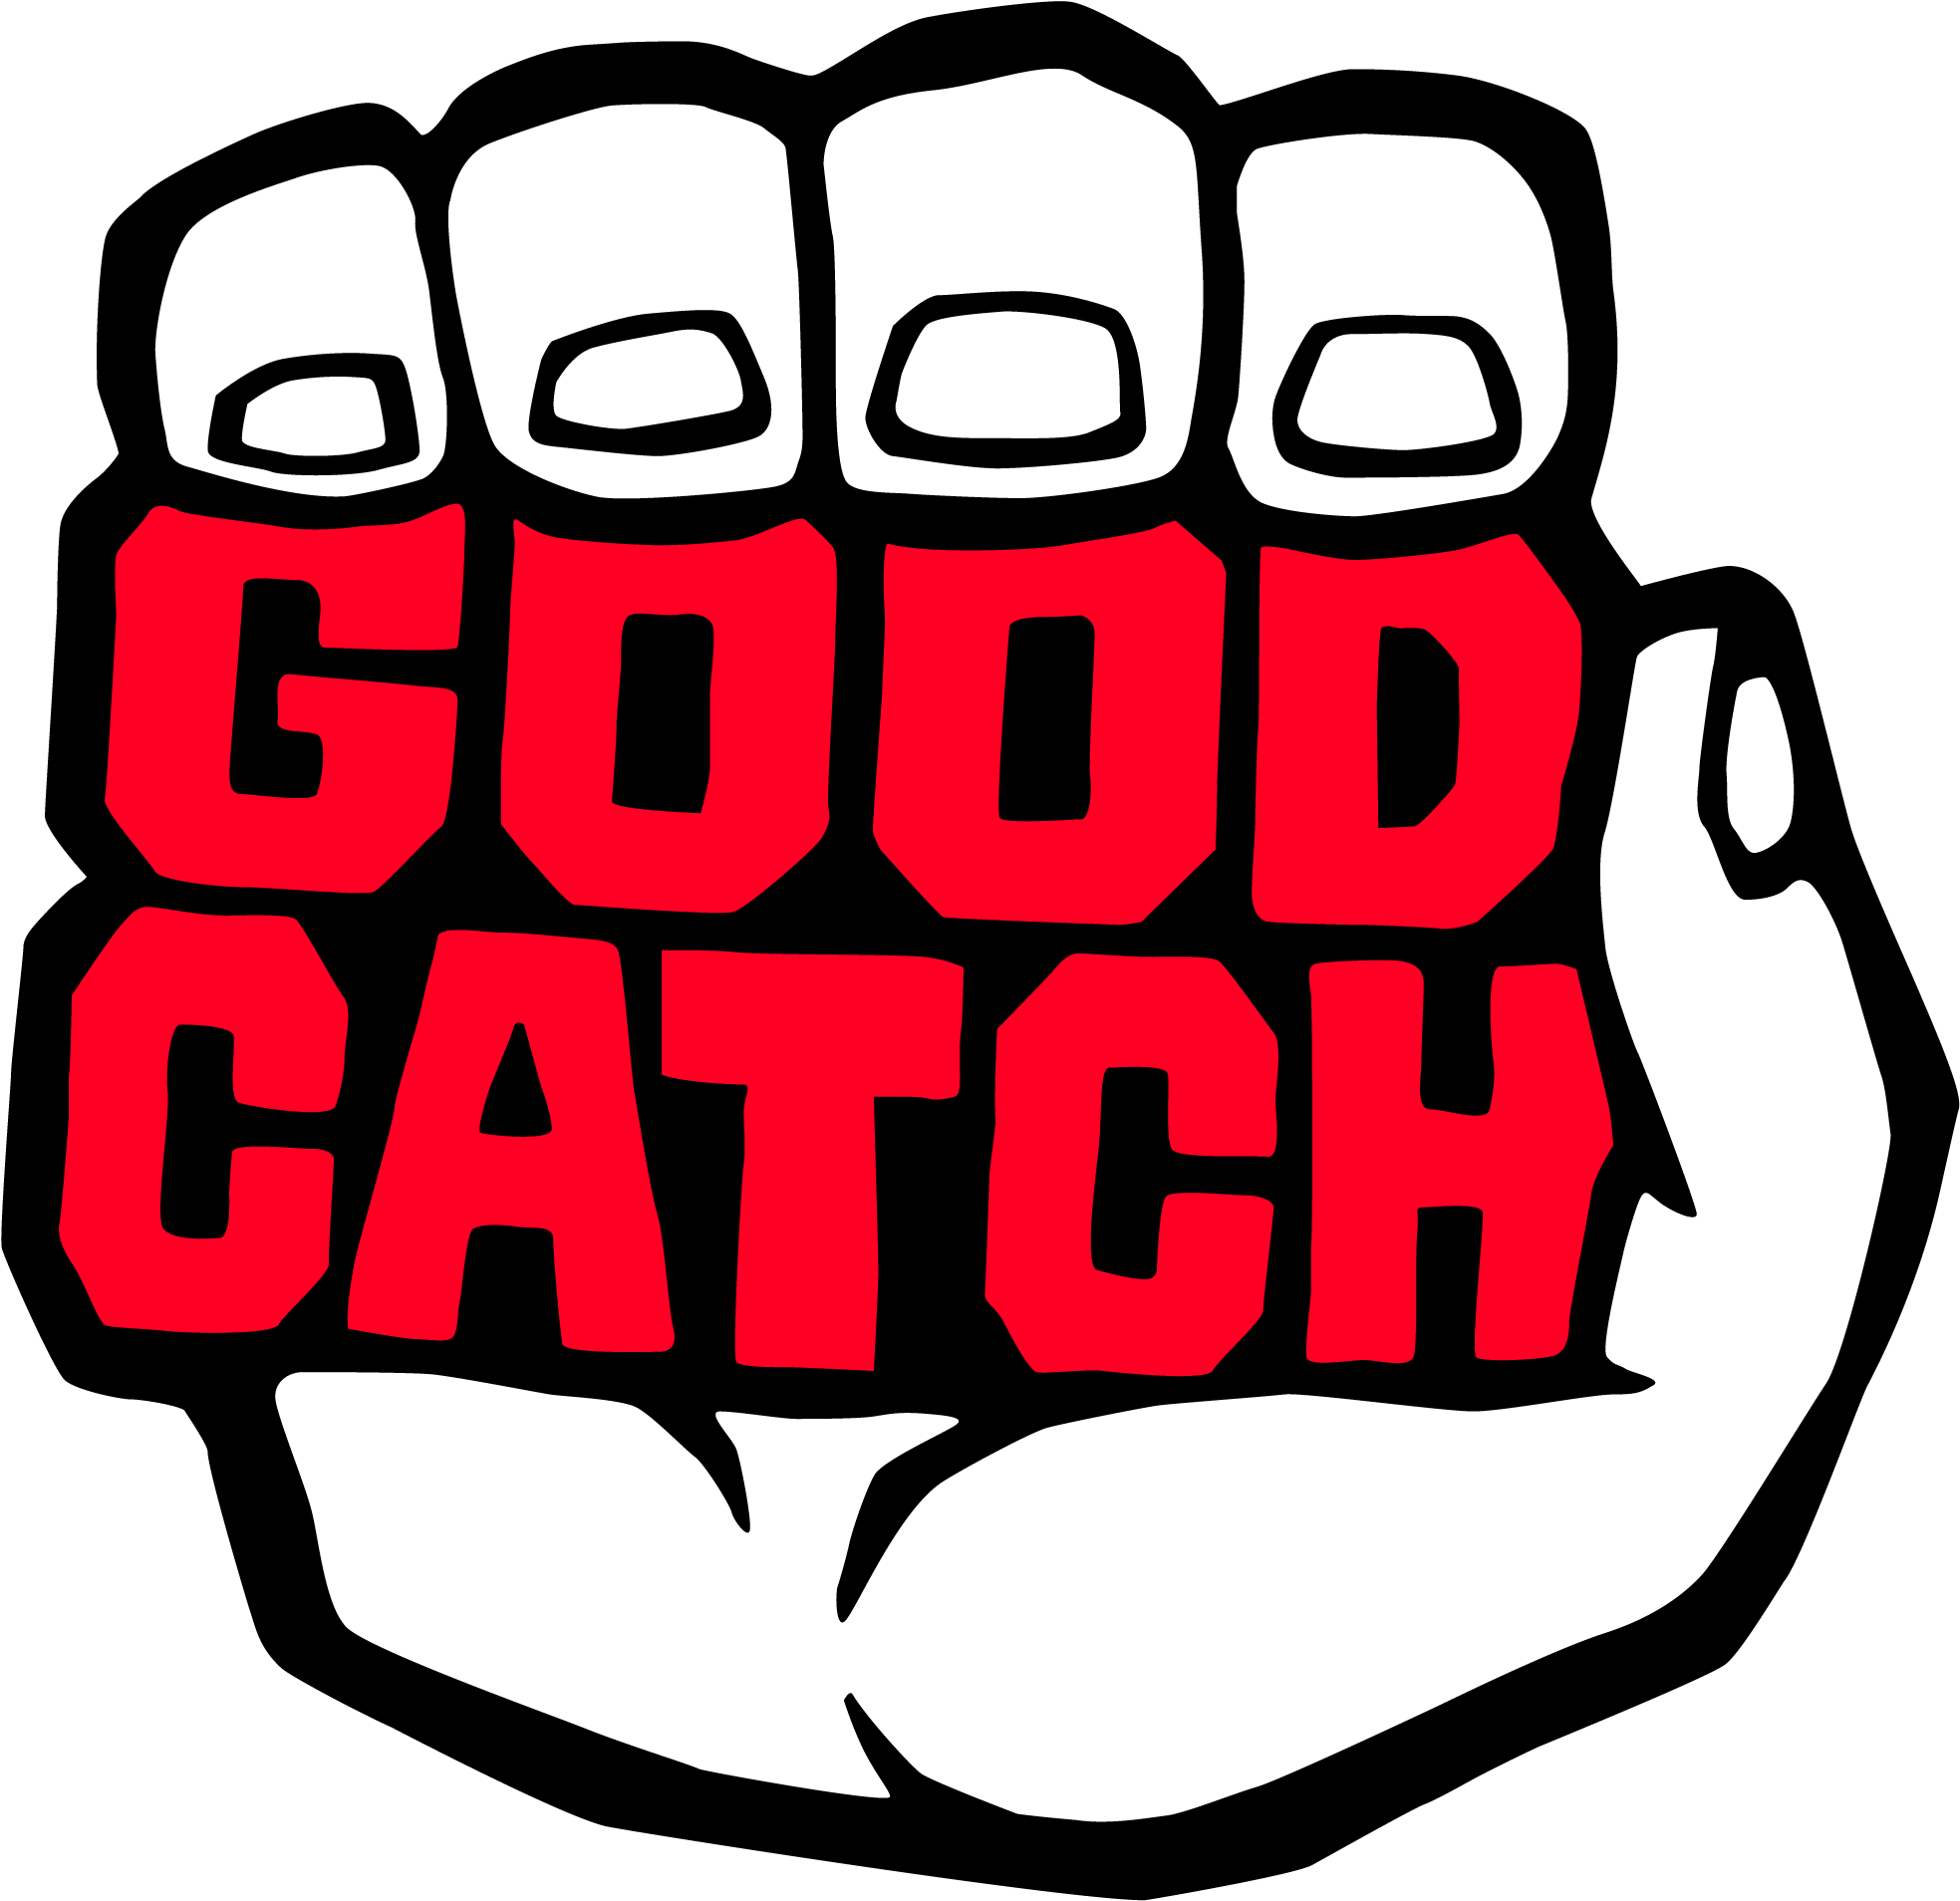 Good Catch (2000x2000)